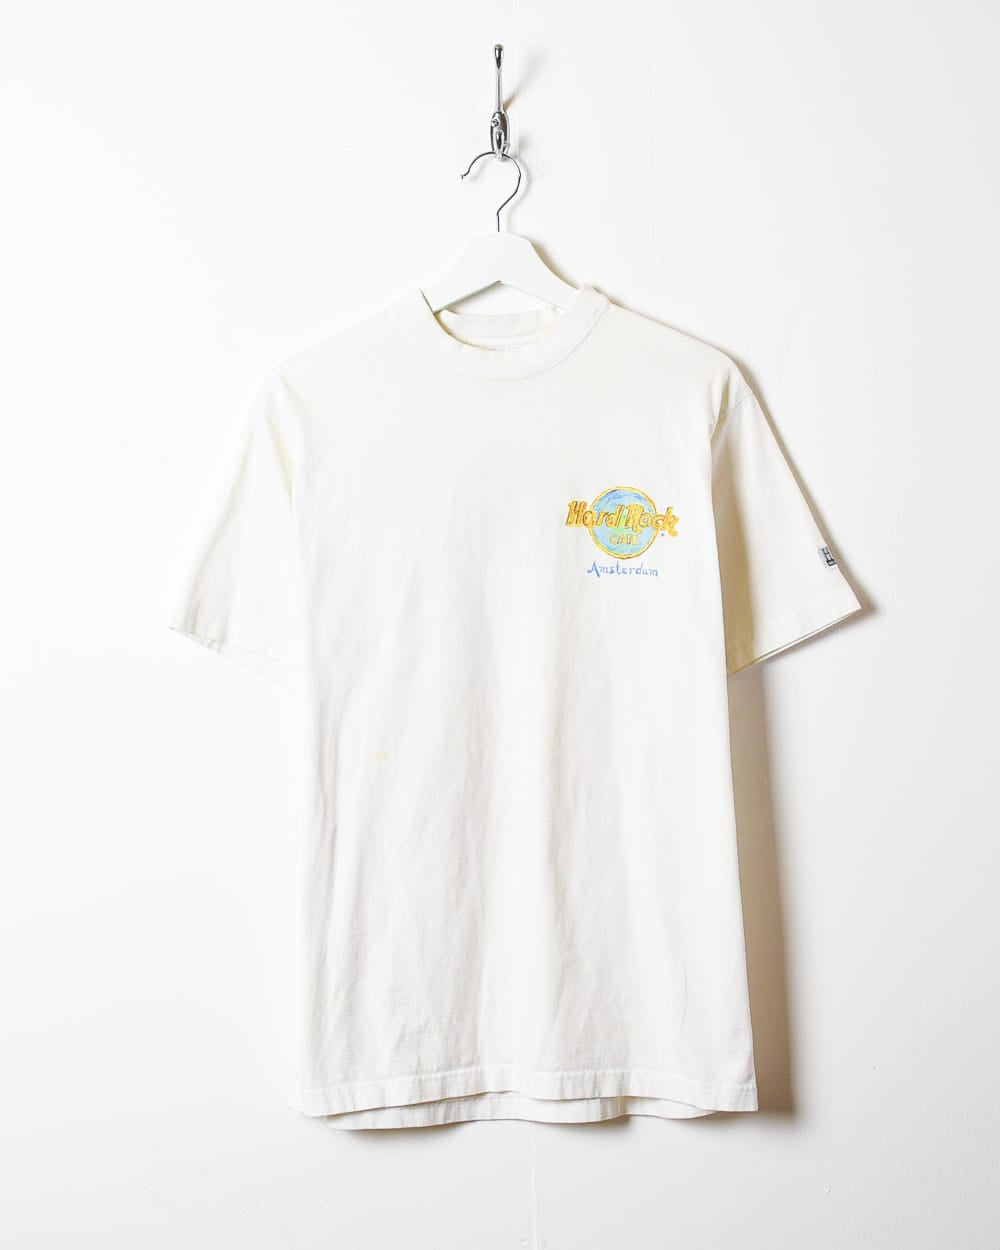 White Hard Rock Cafe Amsterdam T-Shirt - Small